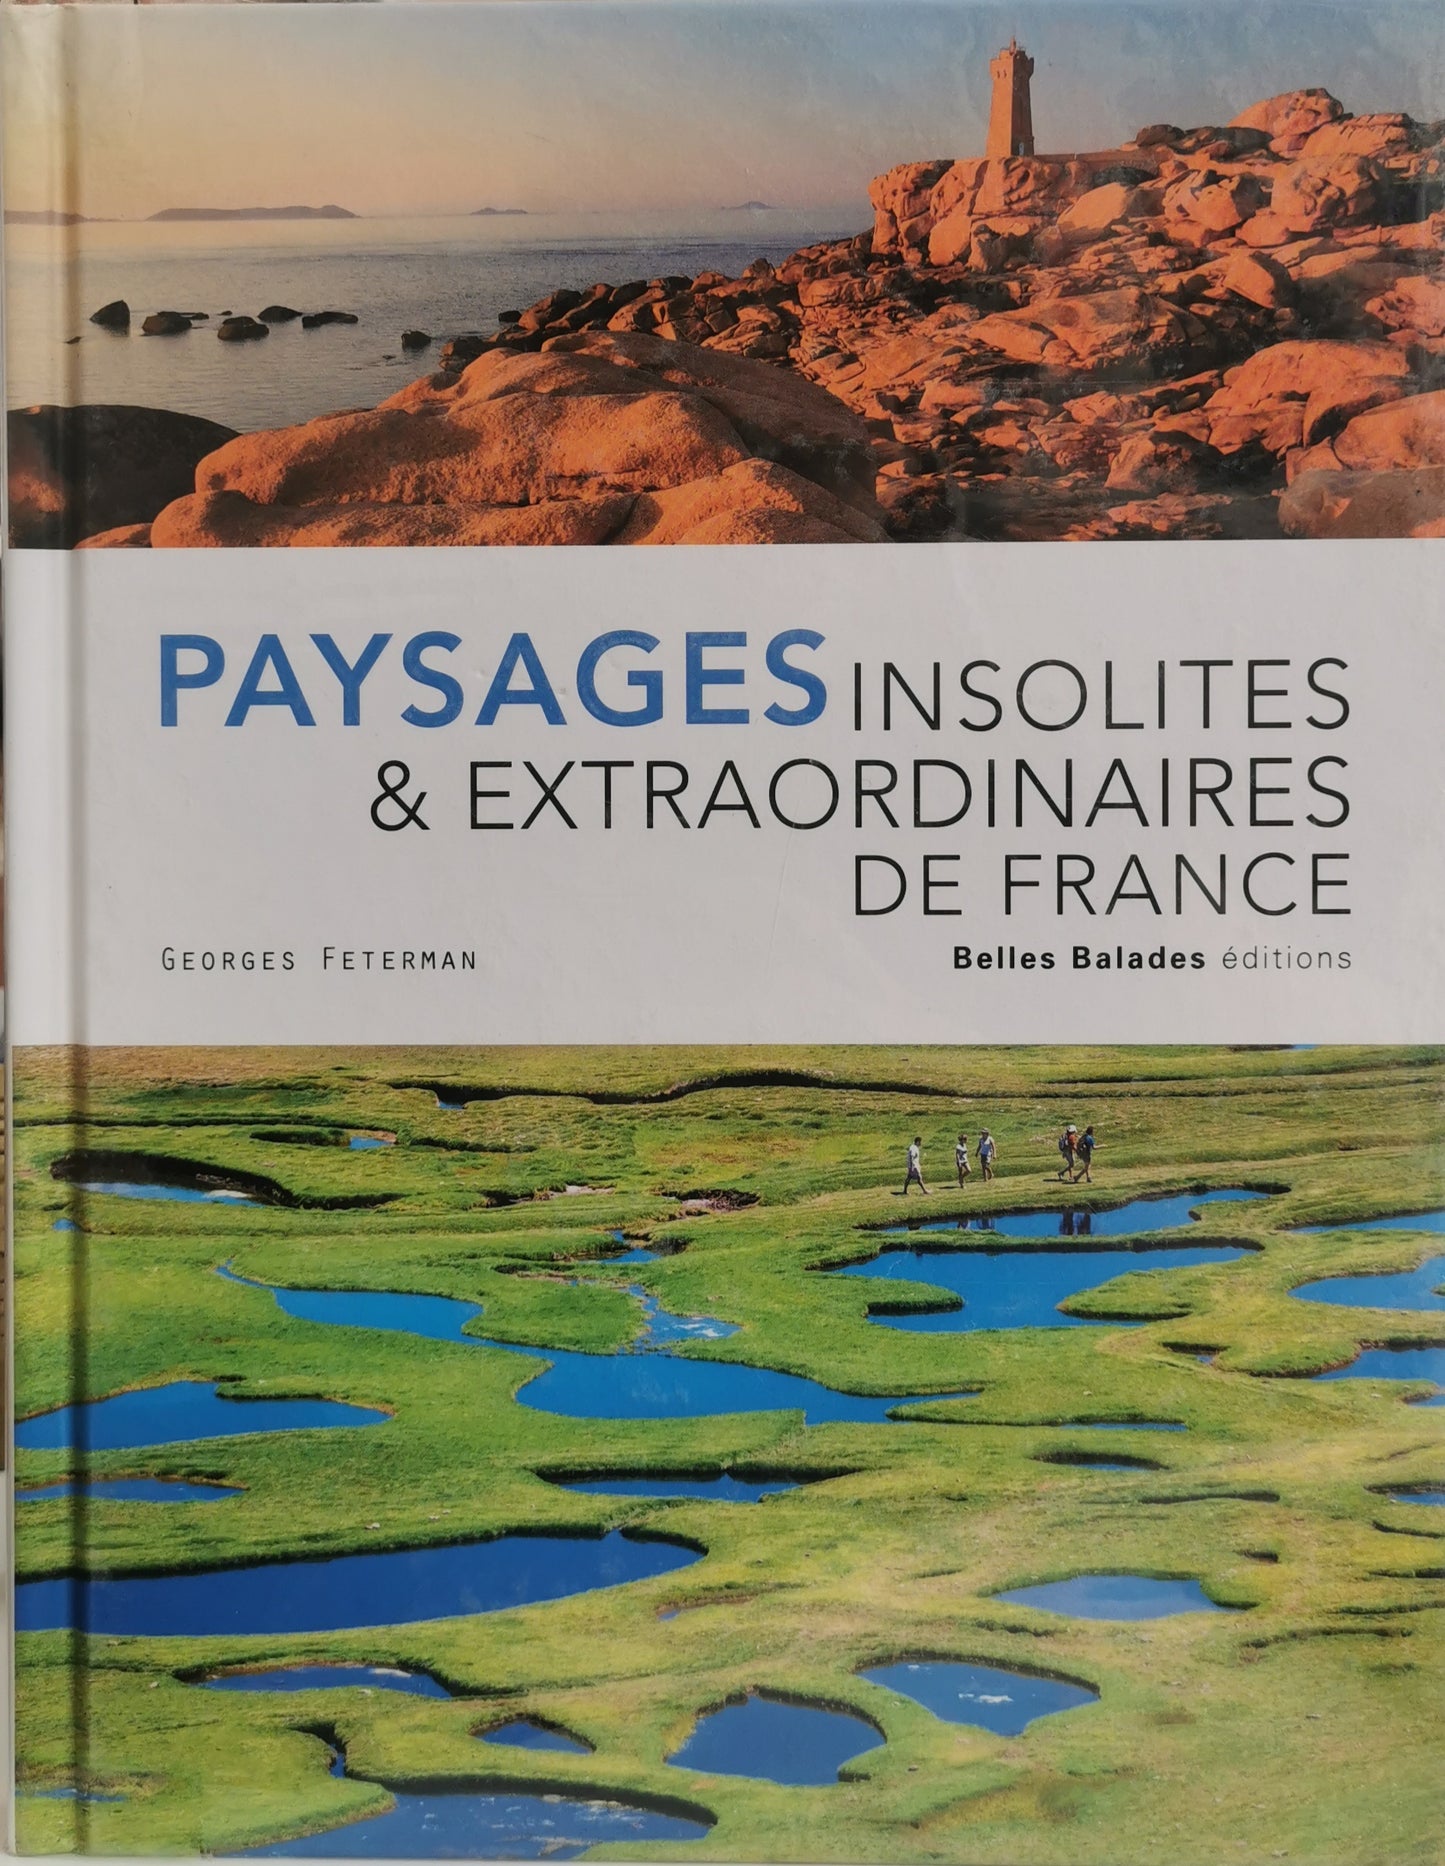 Paysages insolites & extraordinaires de France, Georges Fterman, ed. Belles Balades, 2019.